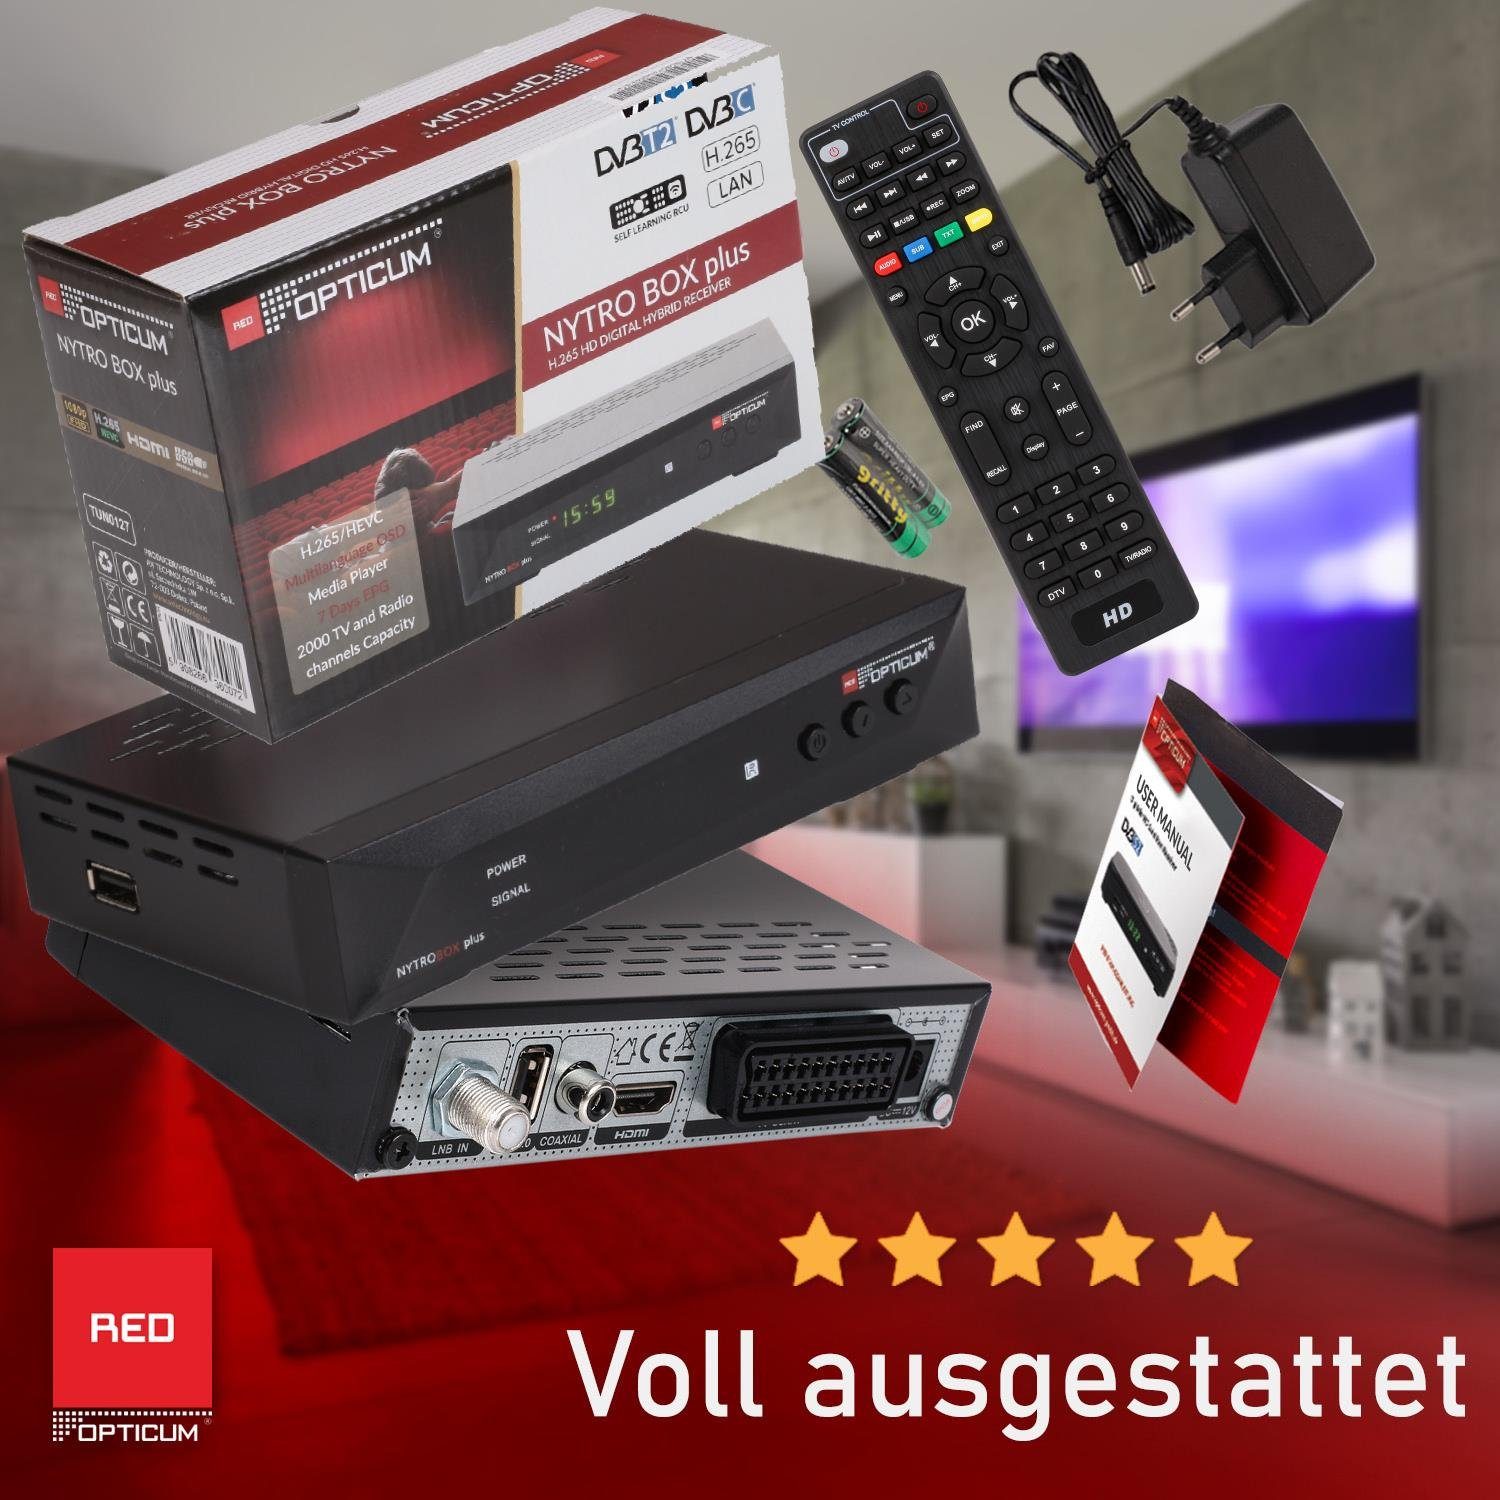 RED OPTICUM Nytro Box Plus Hybrid PVR, HDMI, & Receiver SCART) USB, Aufnahmefunktion mit DVB-T2 Receiver Receiver HD (DVB-C DVB-T2